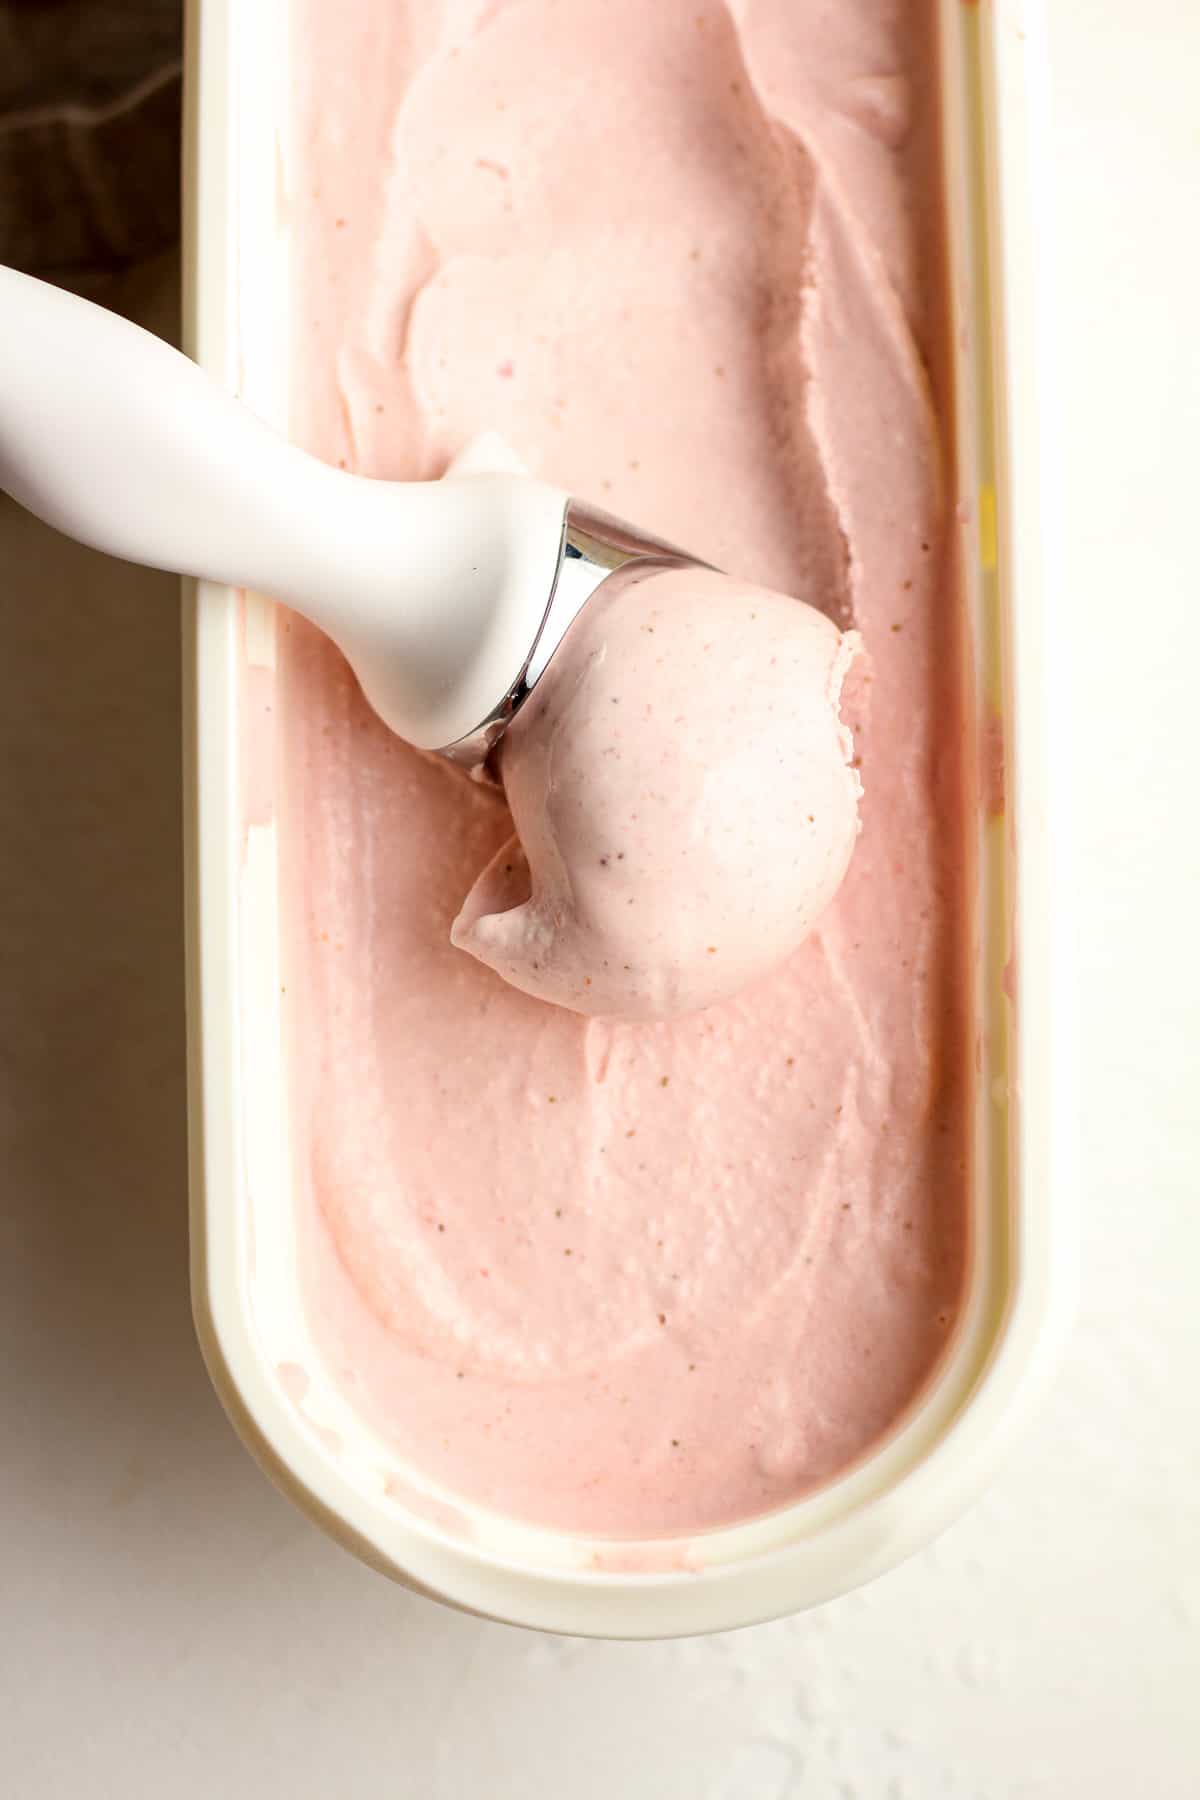 An ice cream scoop scooping up some strawberry ice cream.